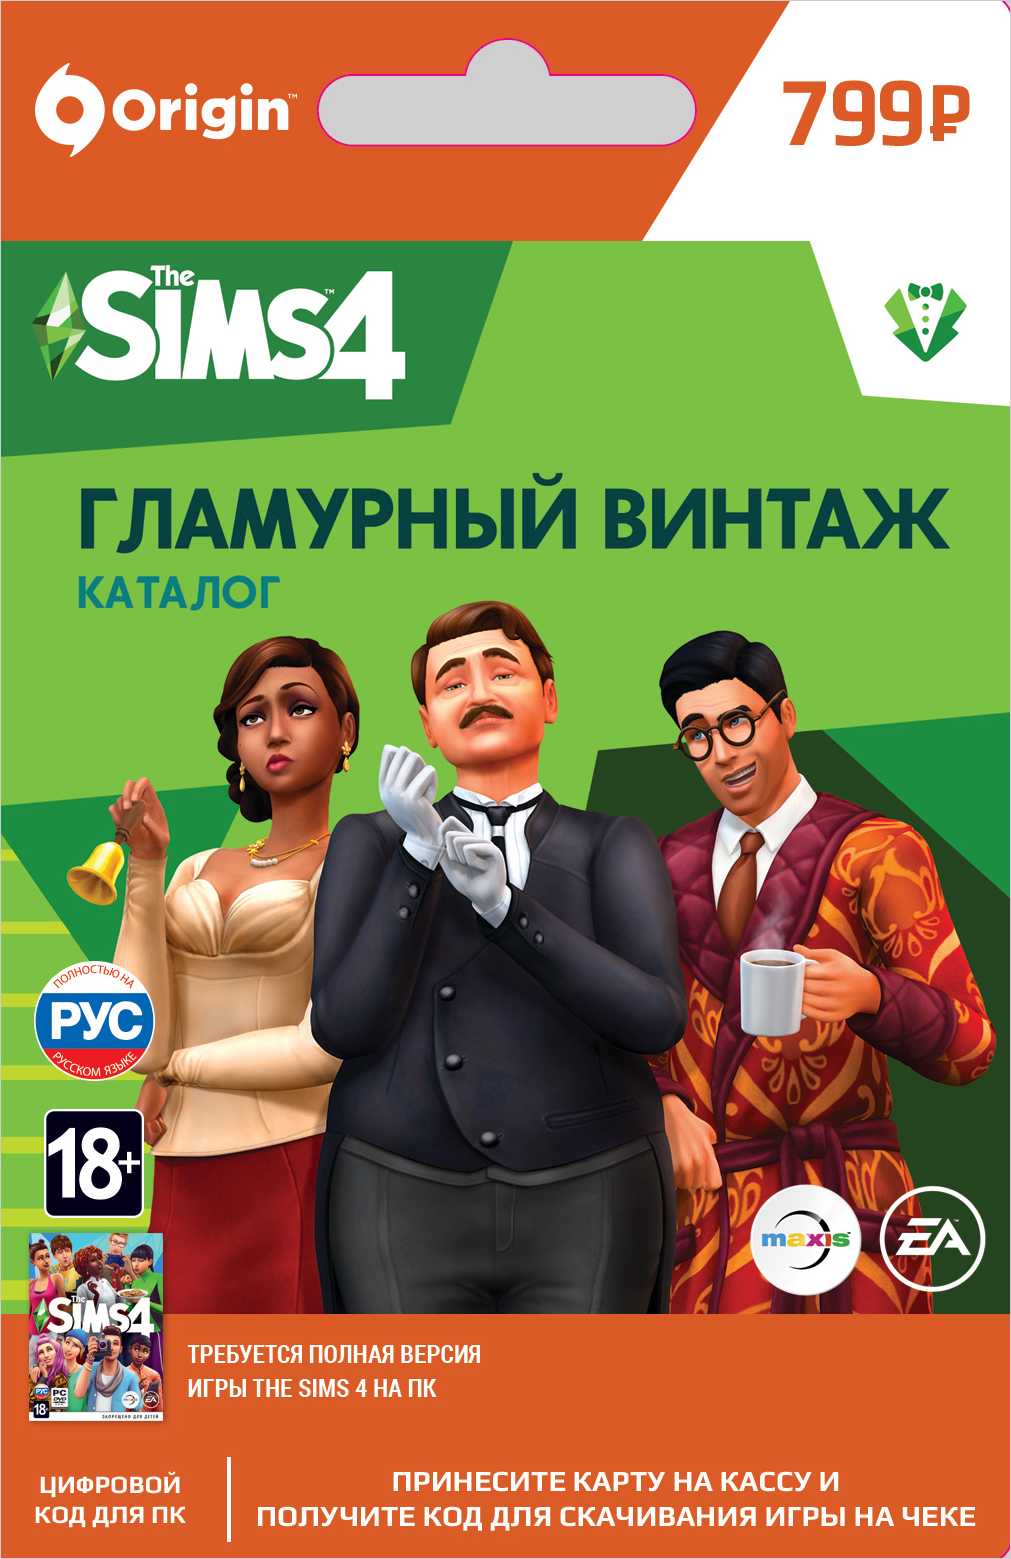 the sims 4 гламурный винтаж. каталог [pc